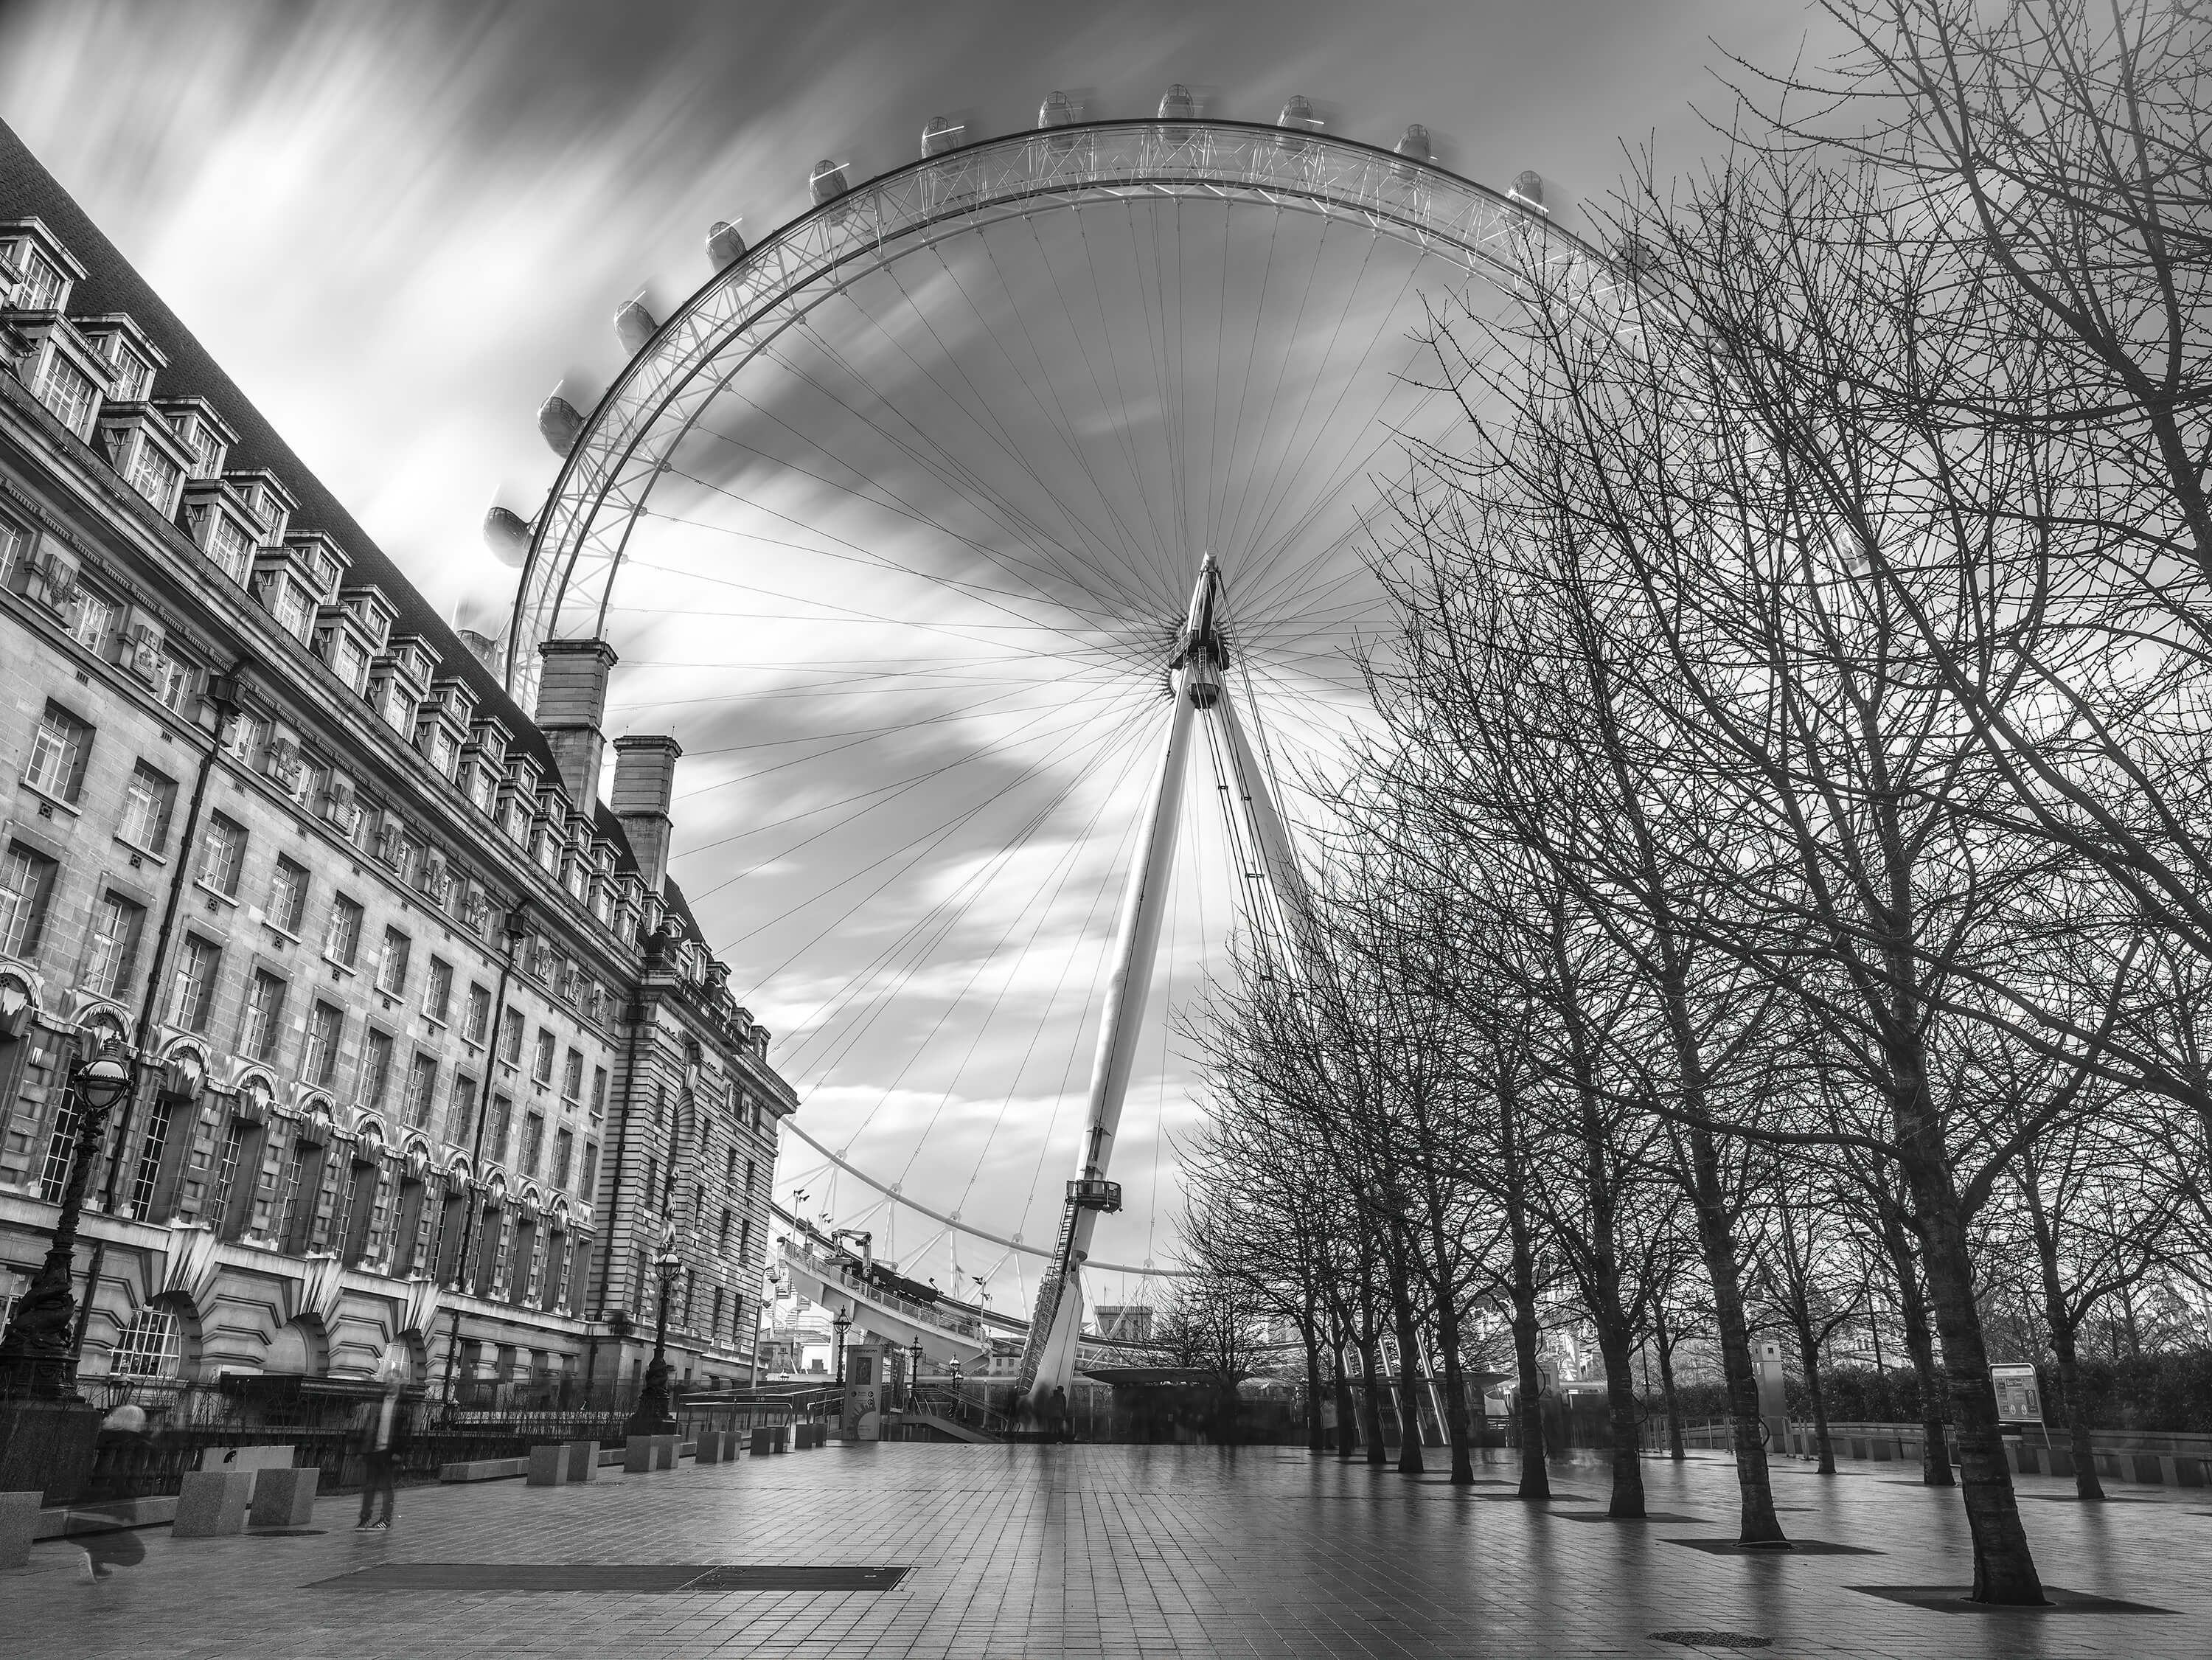  Grande roue de Londres